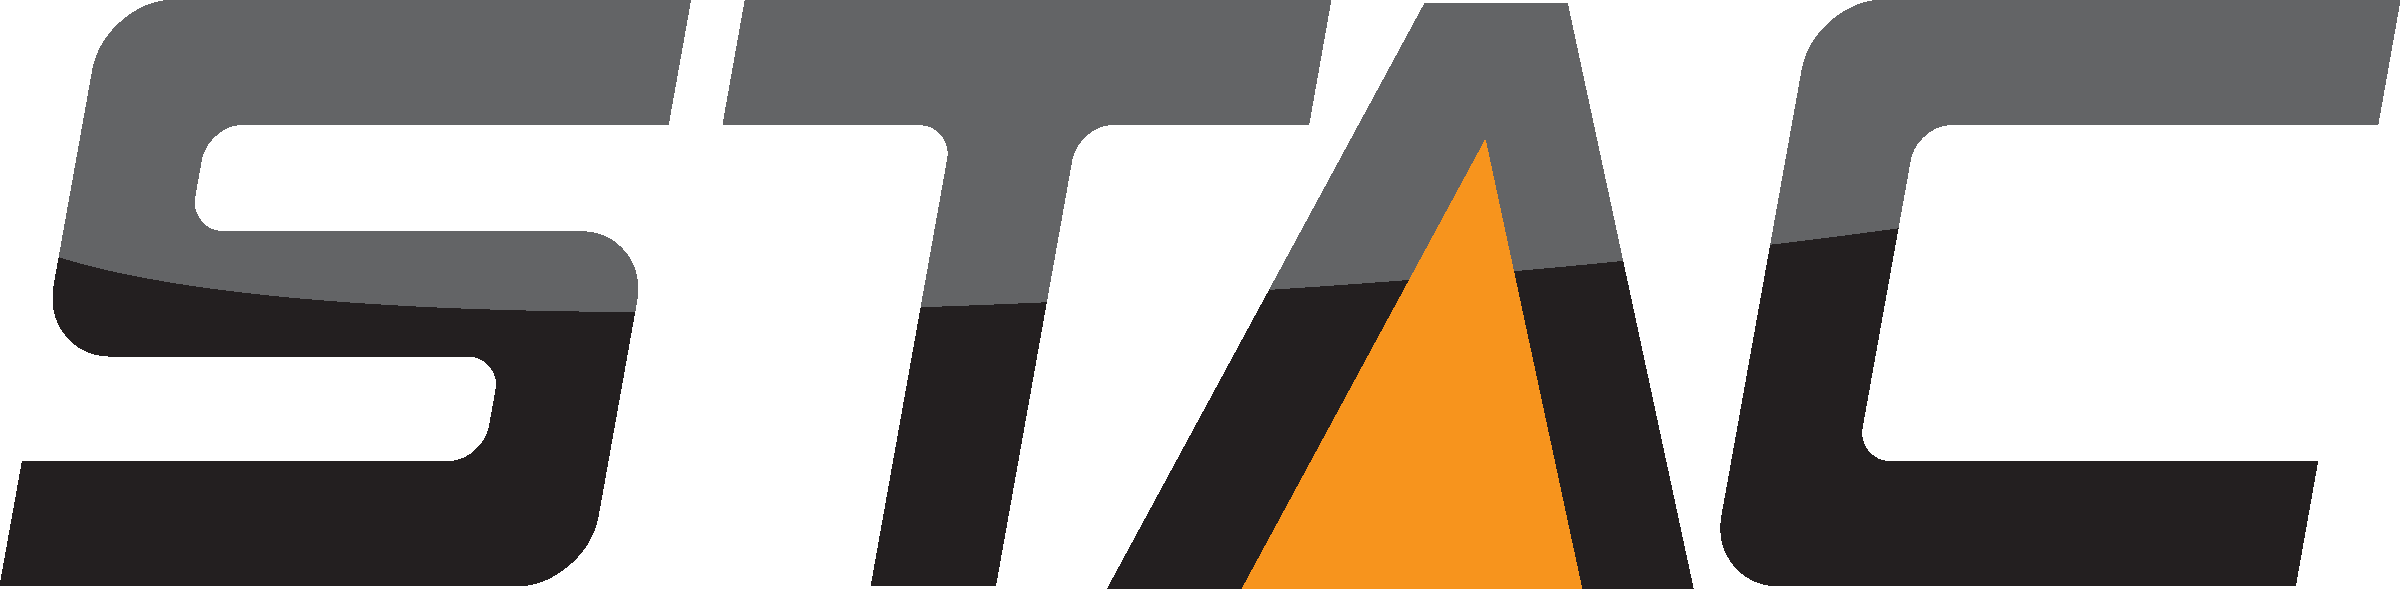 STAC Zero logo